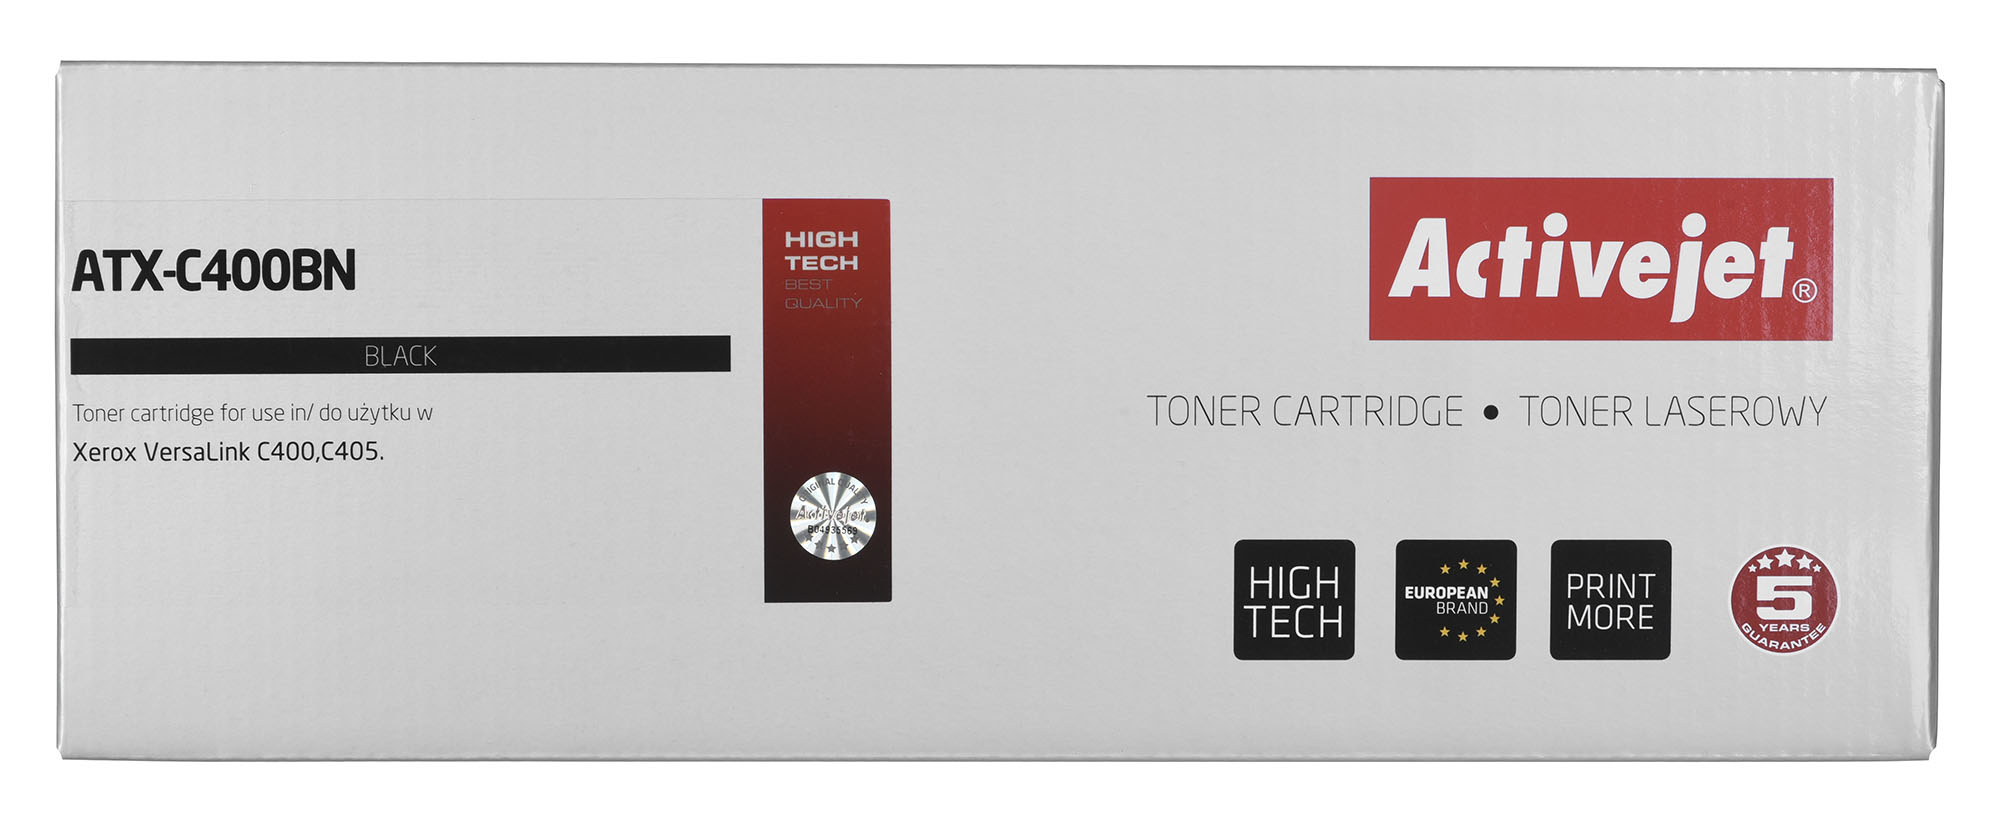 Toner Activejet ATX-C400BN do drukarki Xerox, zamiennik Xerox 106R03508; Supreme; 2500 stron; czarny.